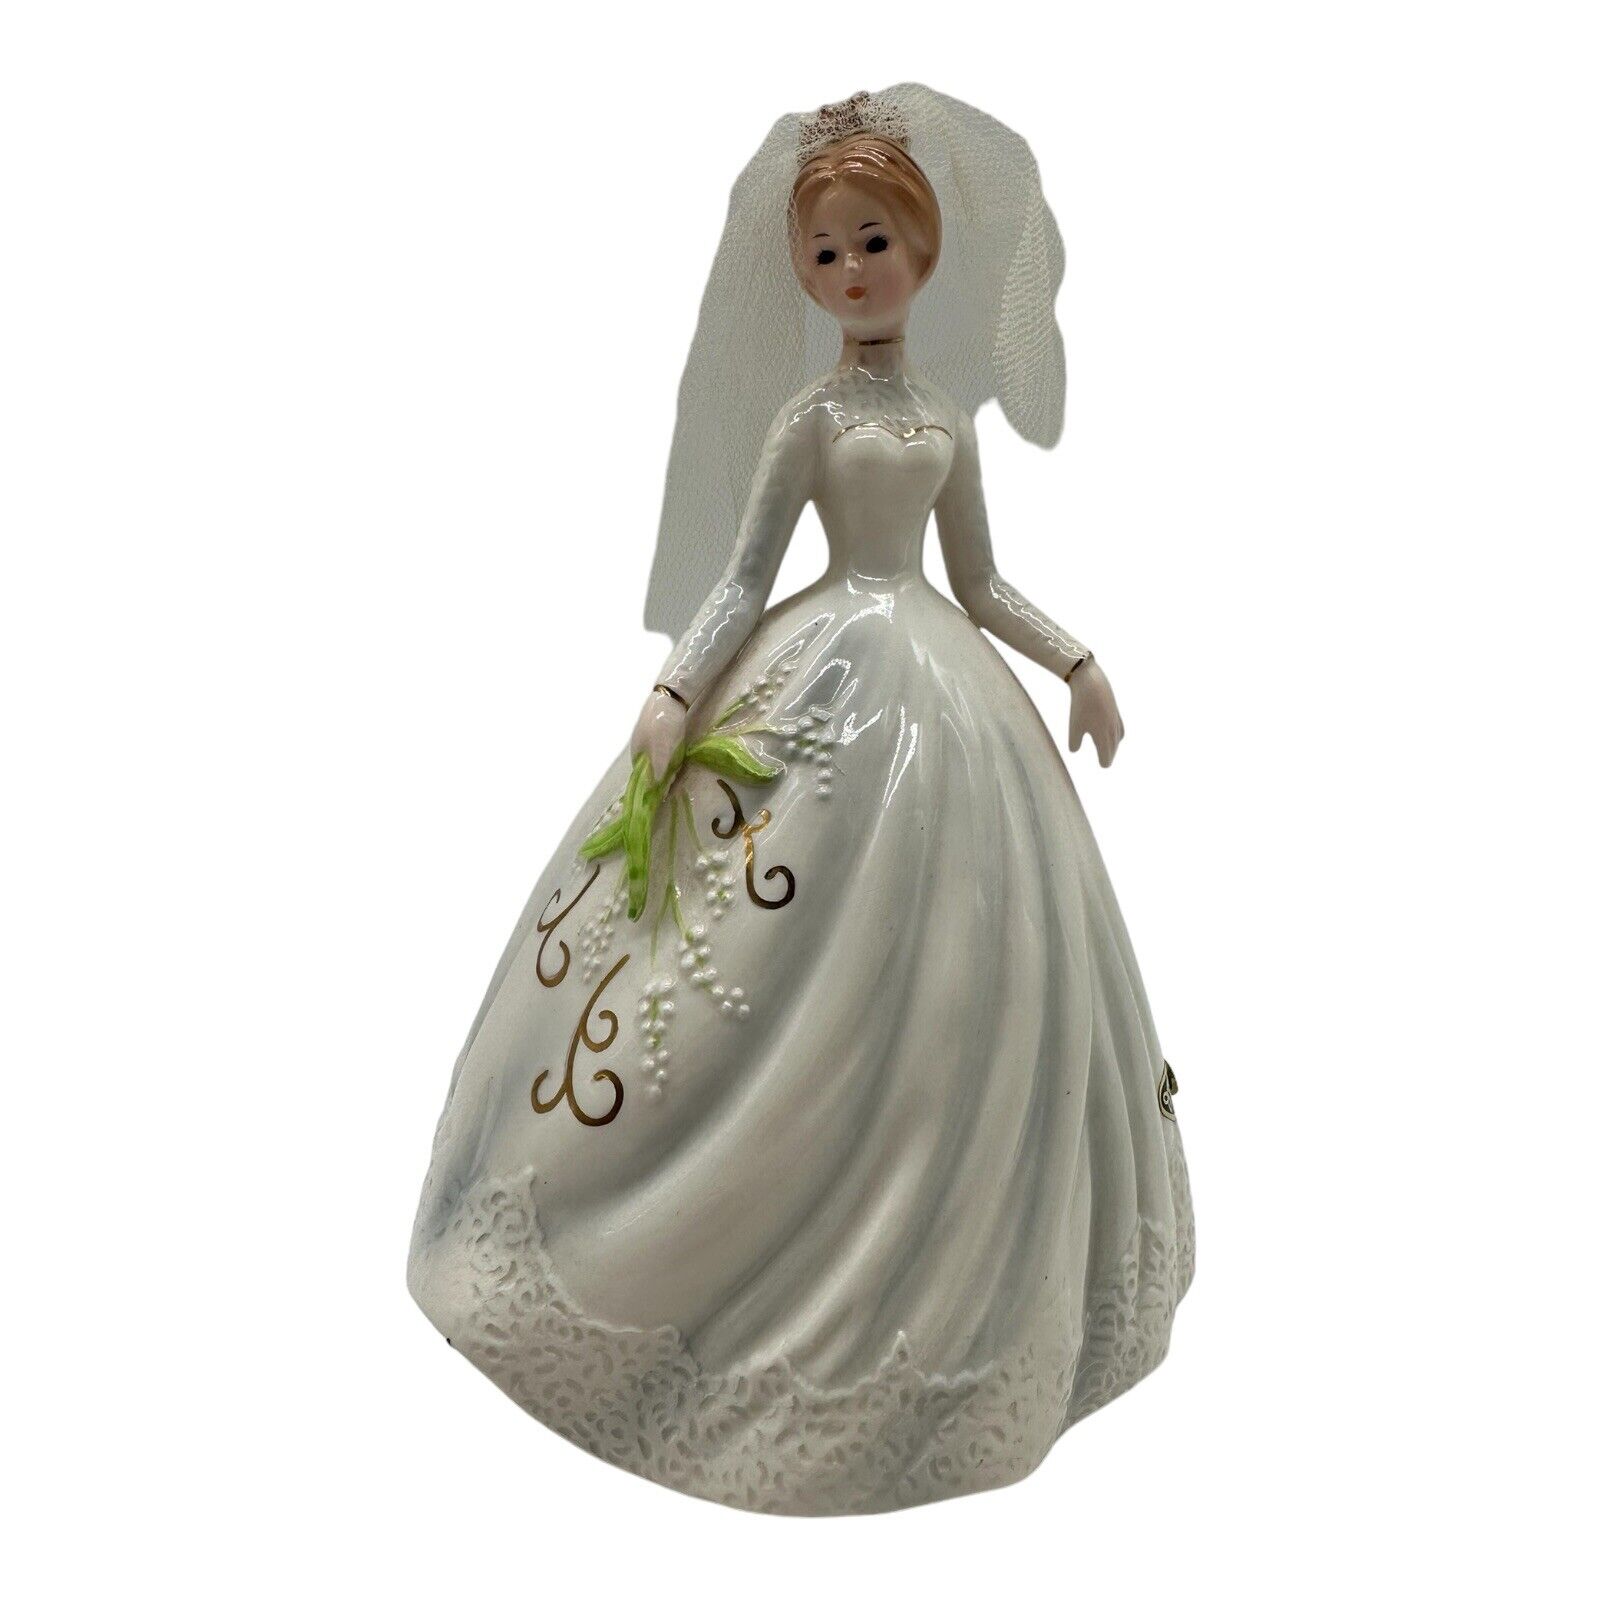 Vintage Josef Originals Figurine Here Comes The Bride Wedding Music Box Musical